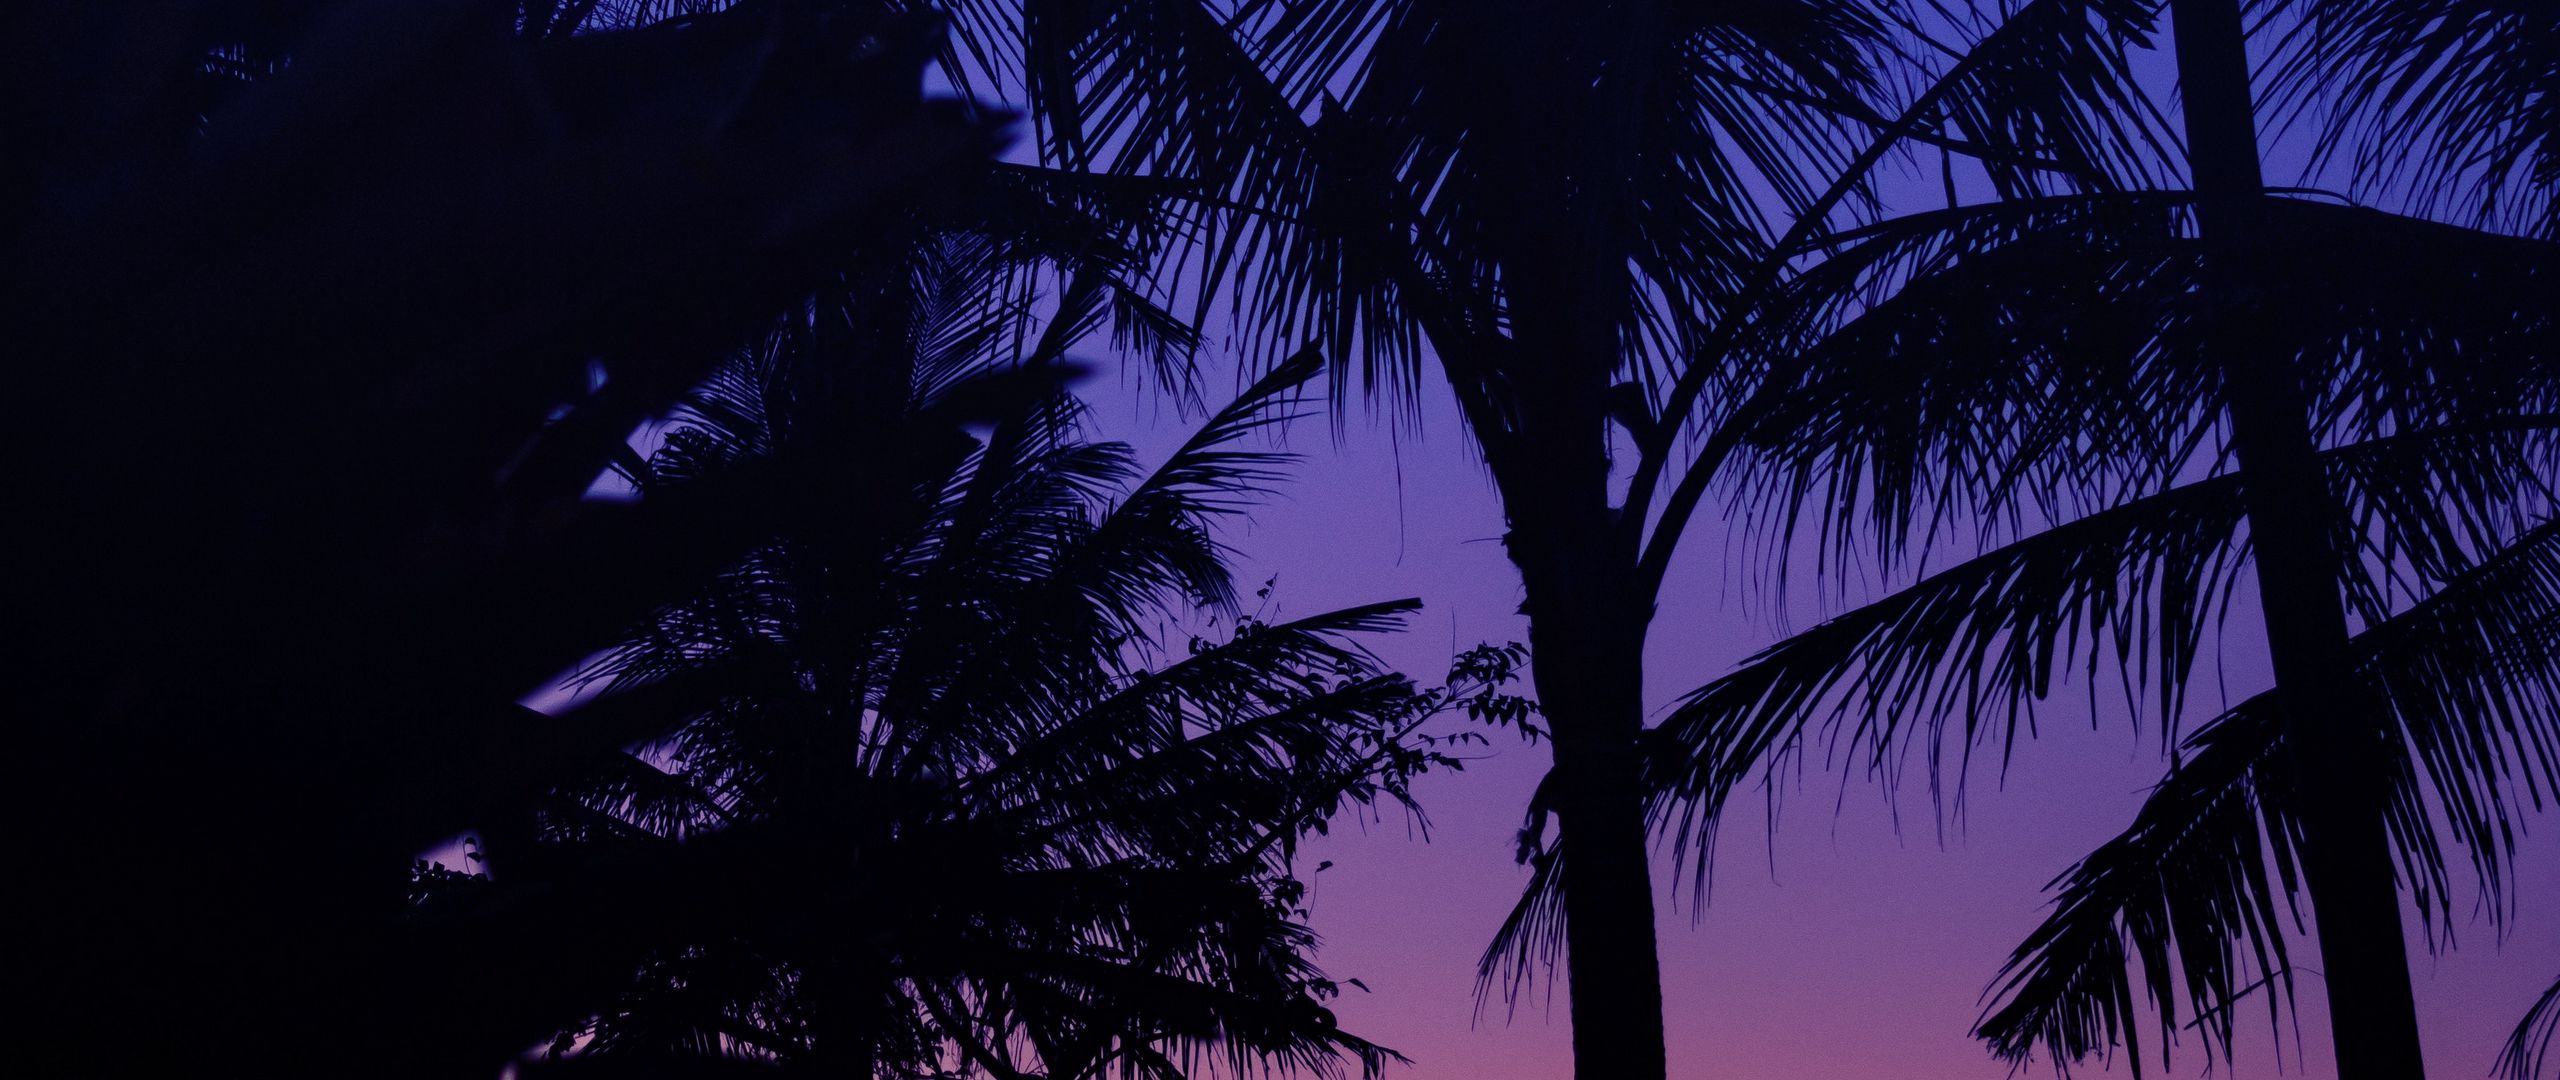 Download wallpaper 2560x1080 palm trees, dark, silhouettes, twilight ...